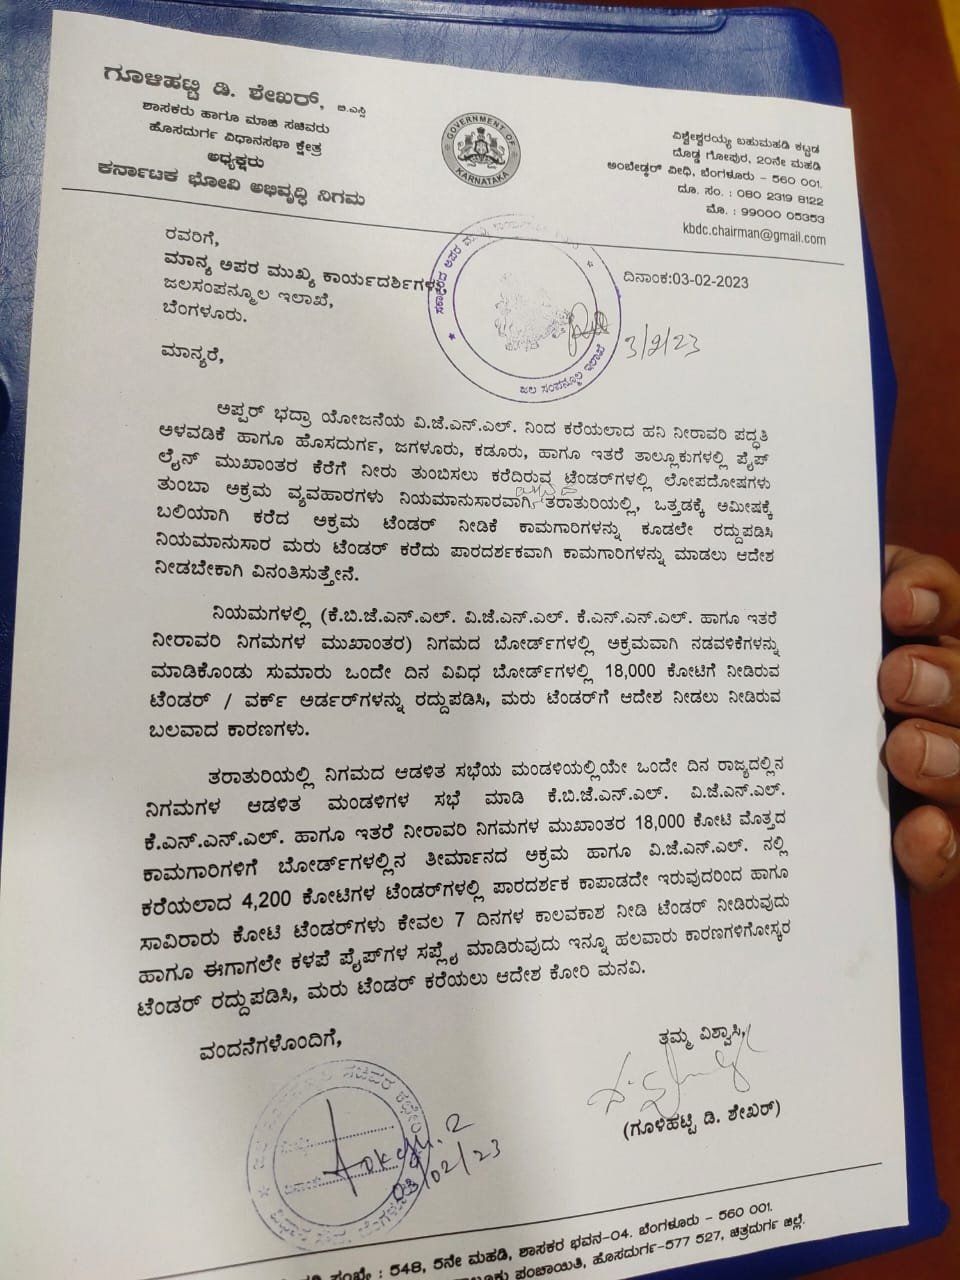 Hosadurga MLA Gulihatti Shekhar letter on alleged tender irregularities in Karnataka